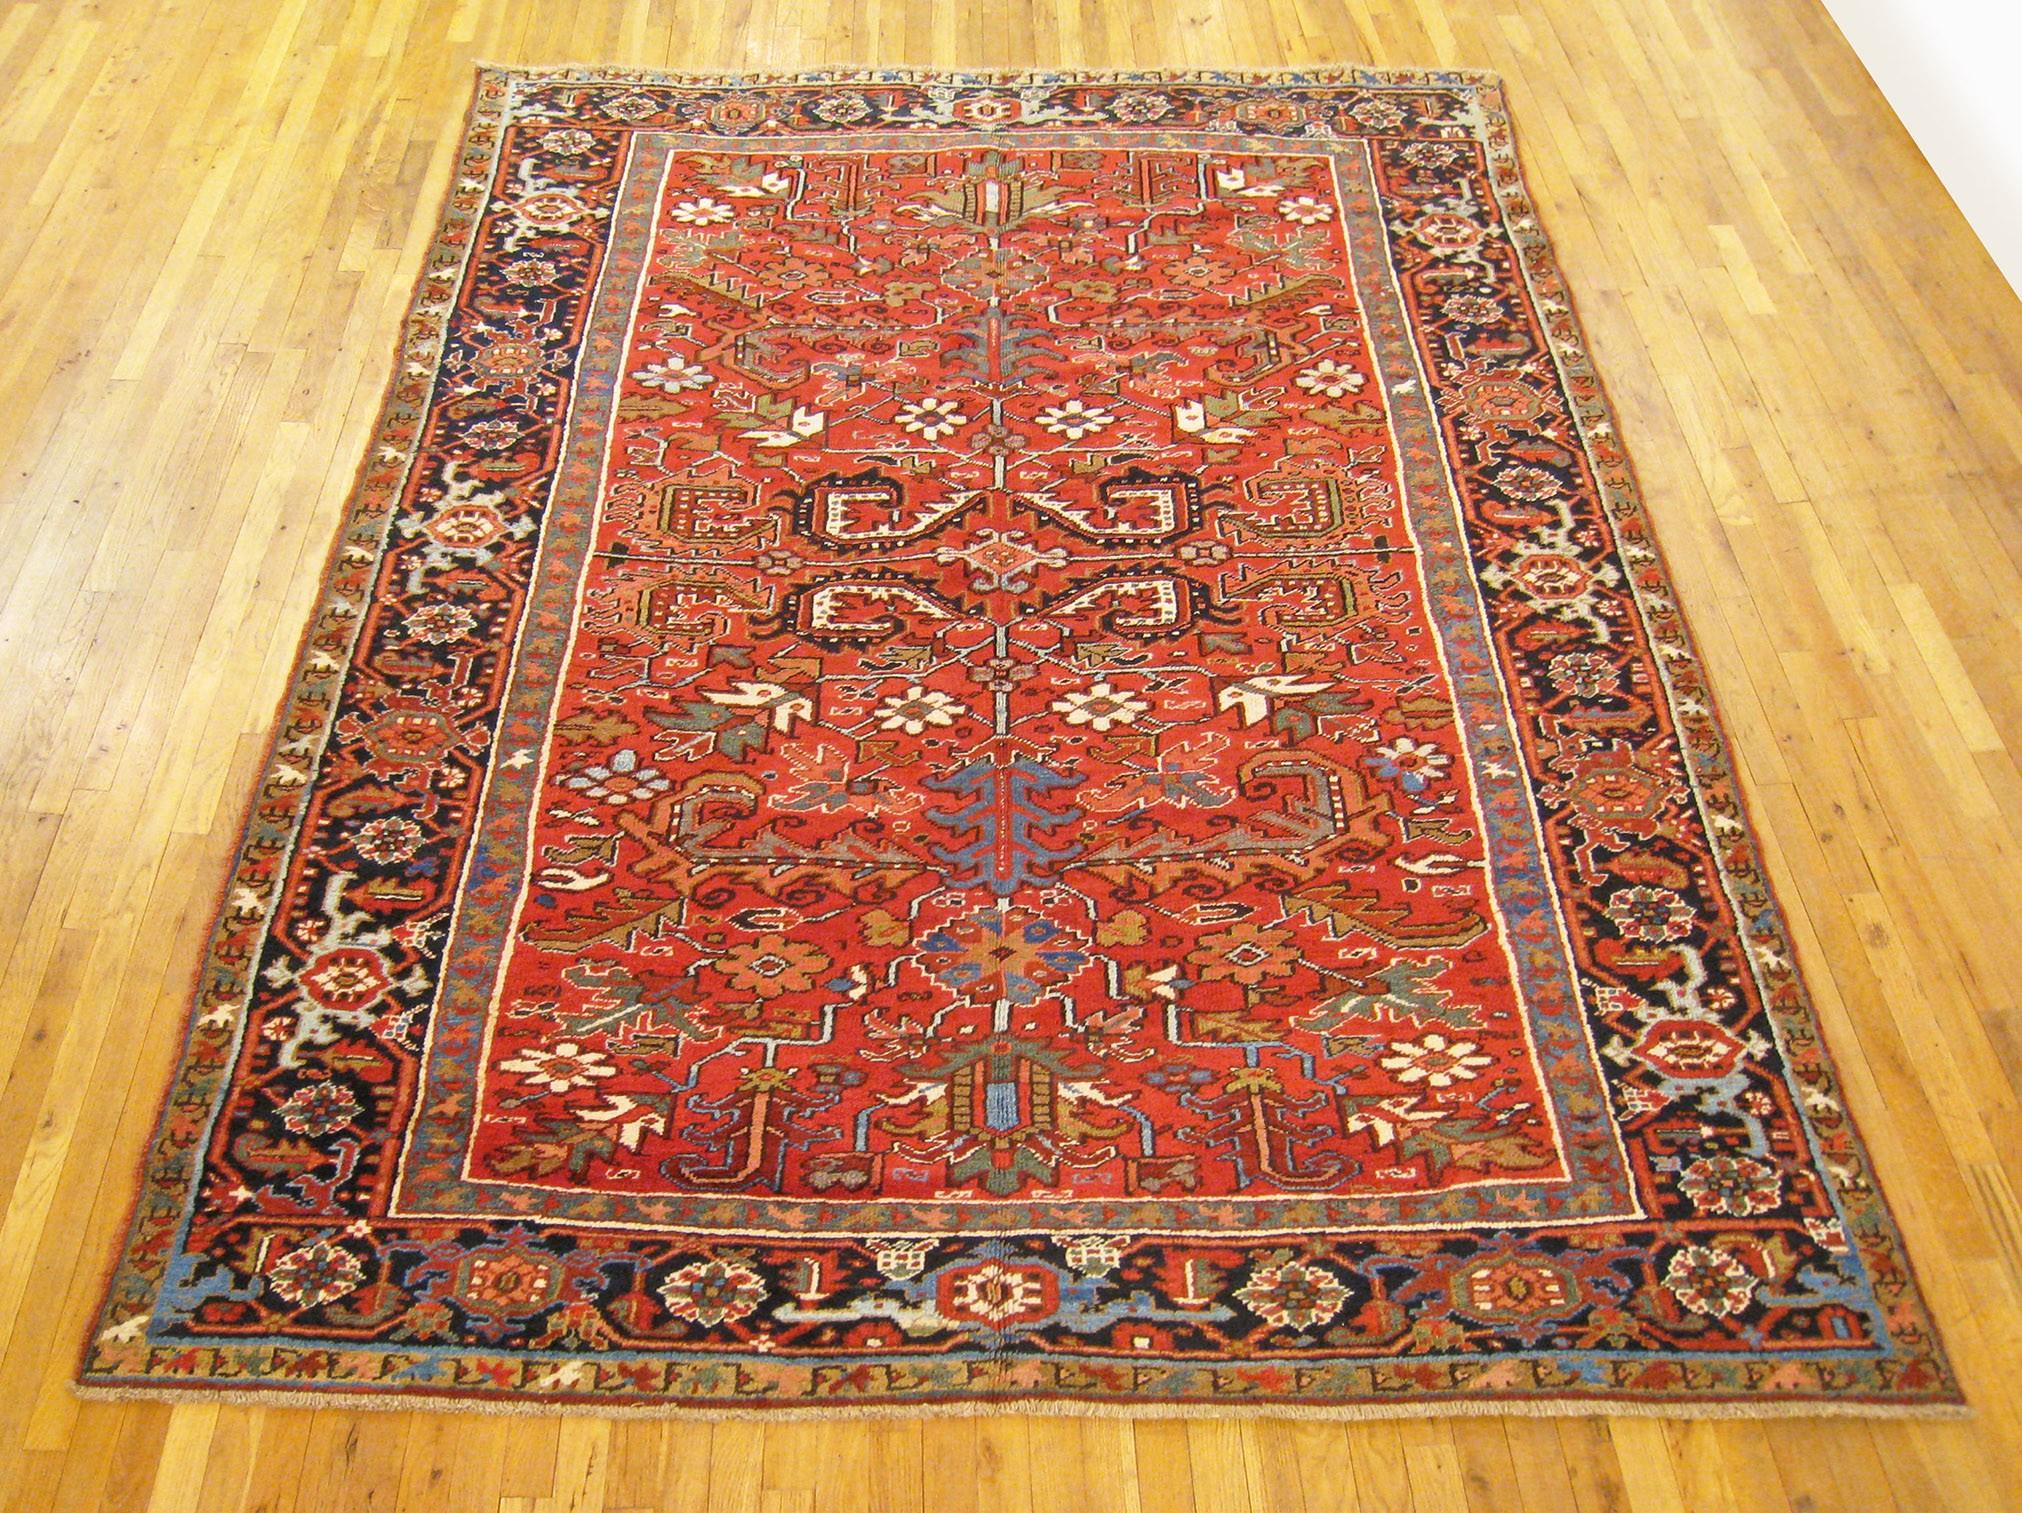 Vintage Persian Heriz oriental rug, room size.

A vintage Persian Heriz oriental rug, size 9'10